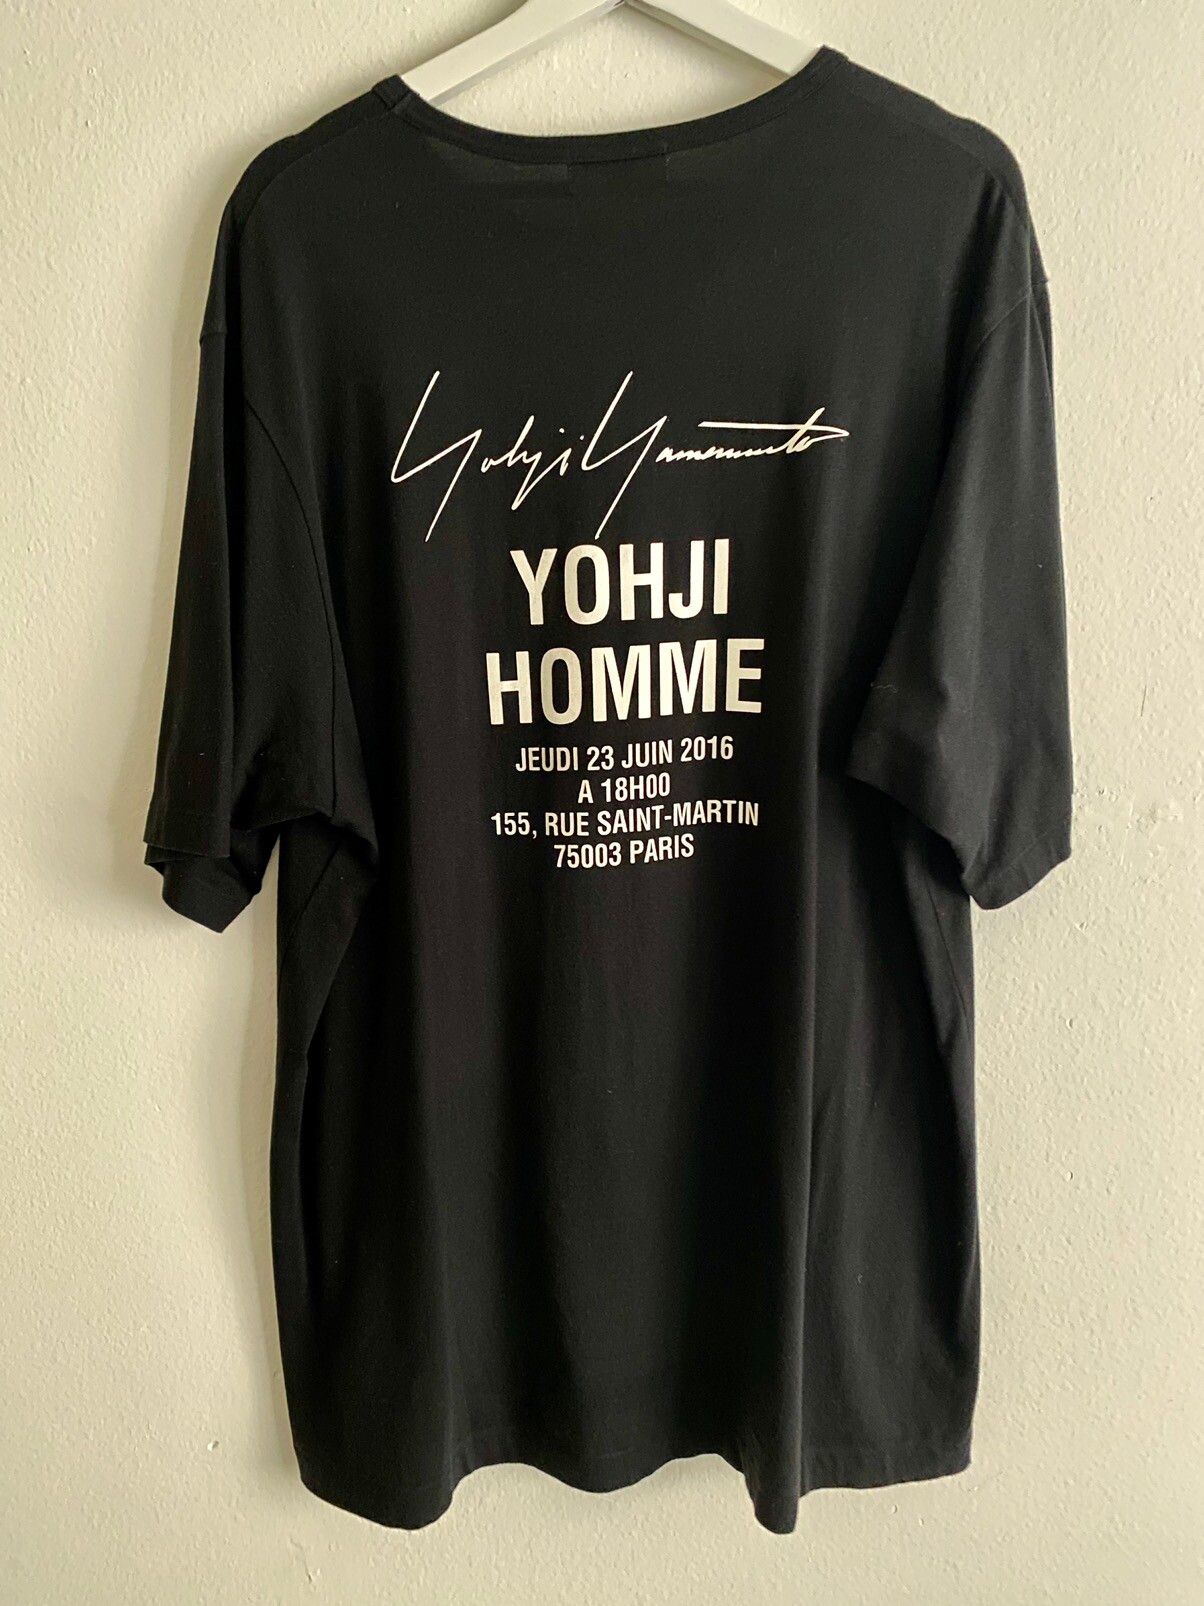 Yohji Yamamoto Yohji Yamamoto Pour Homme Staff Tee | Grailed